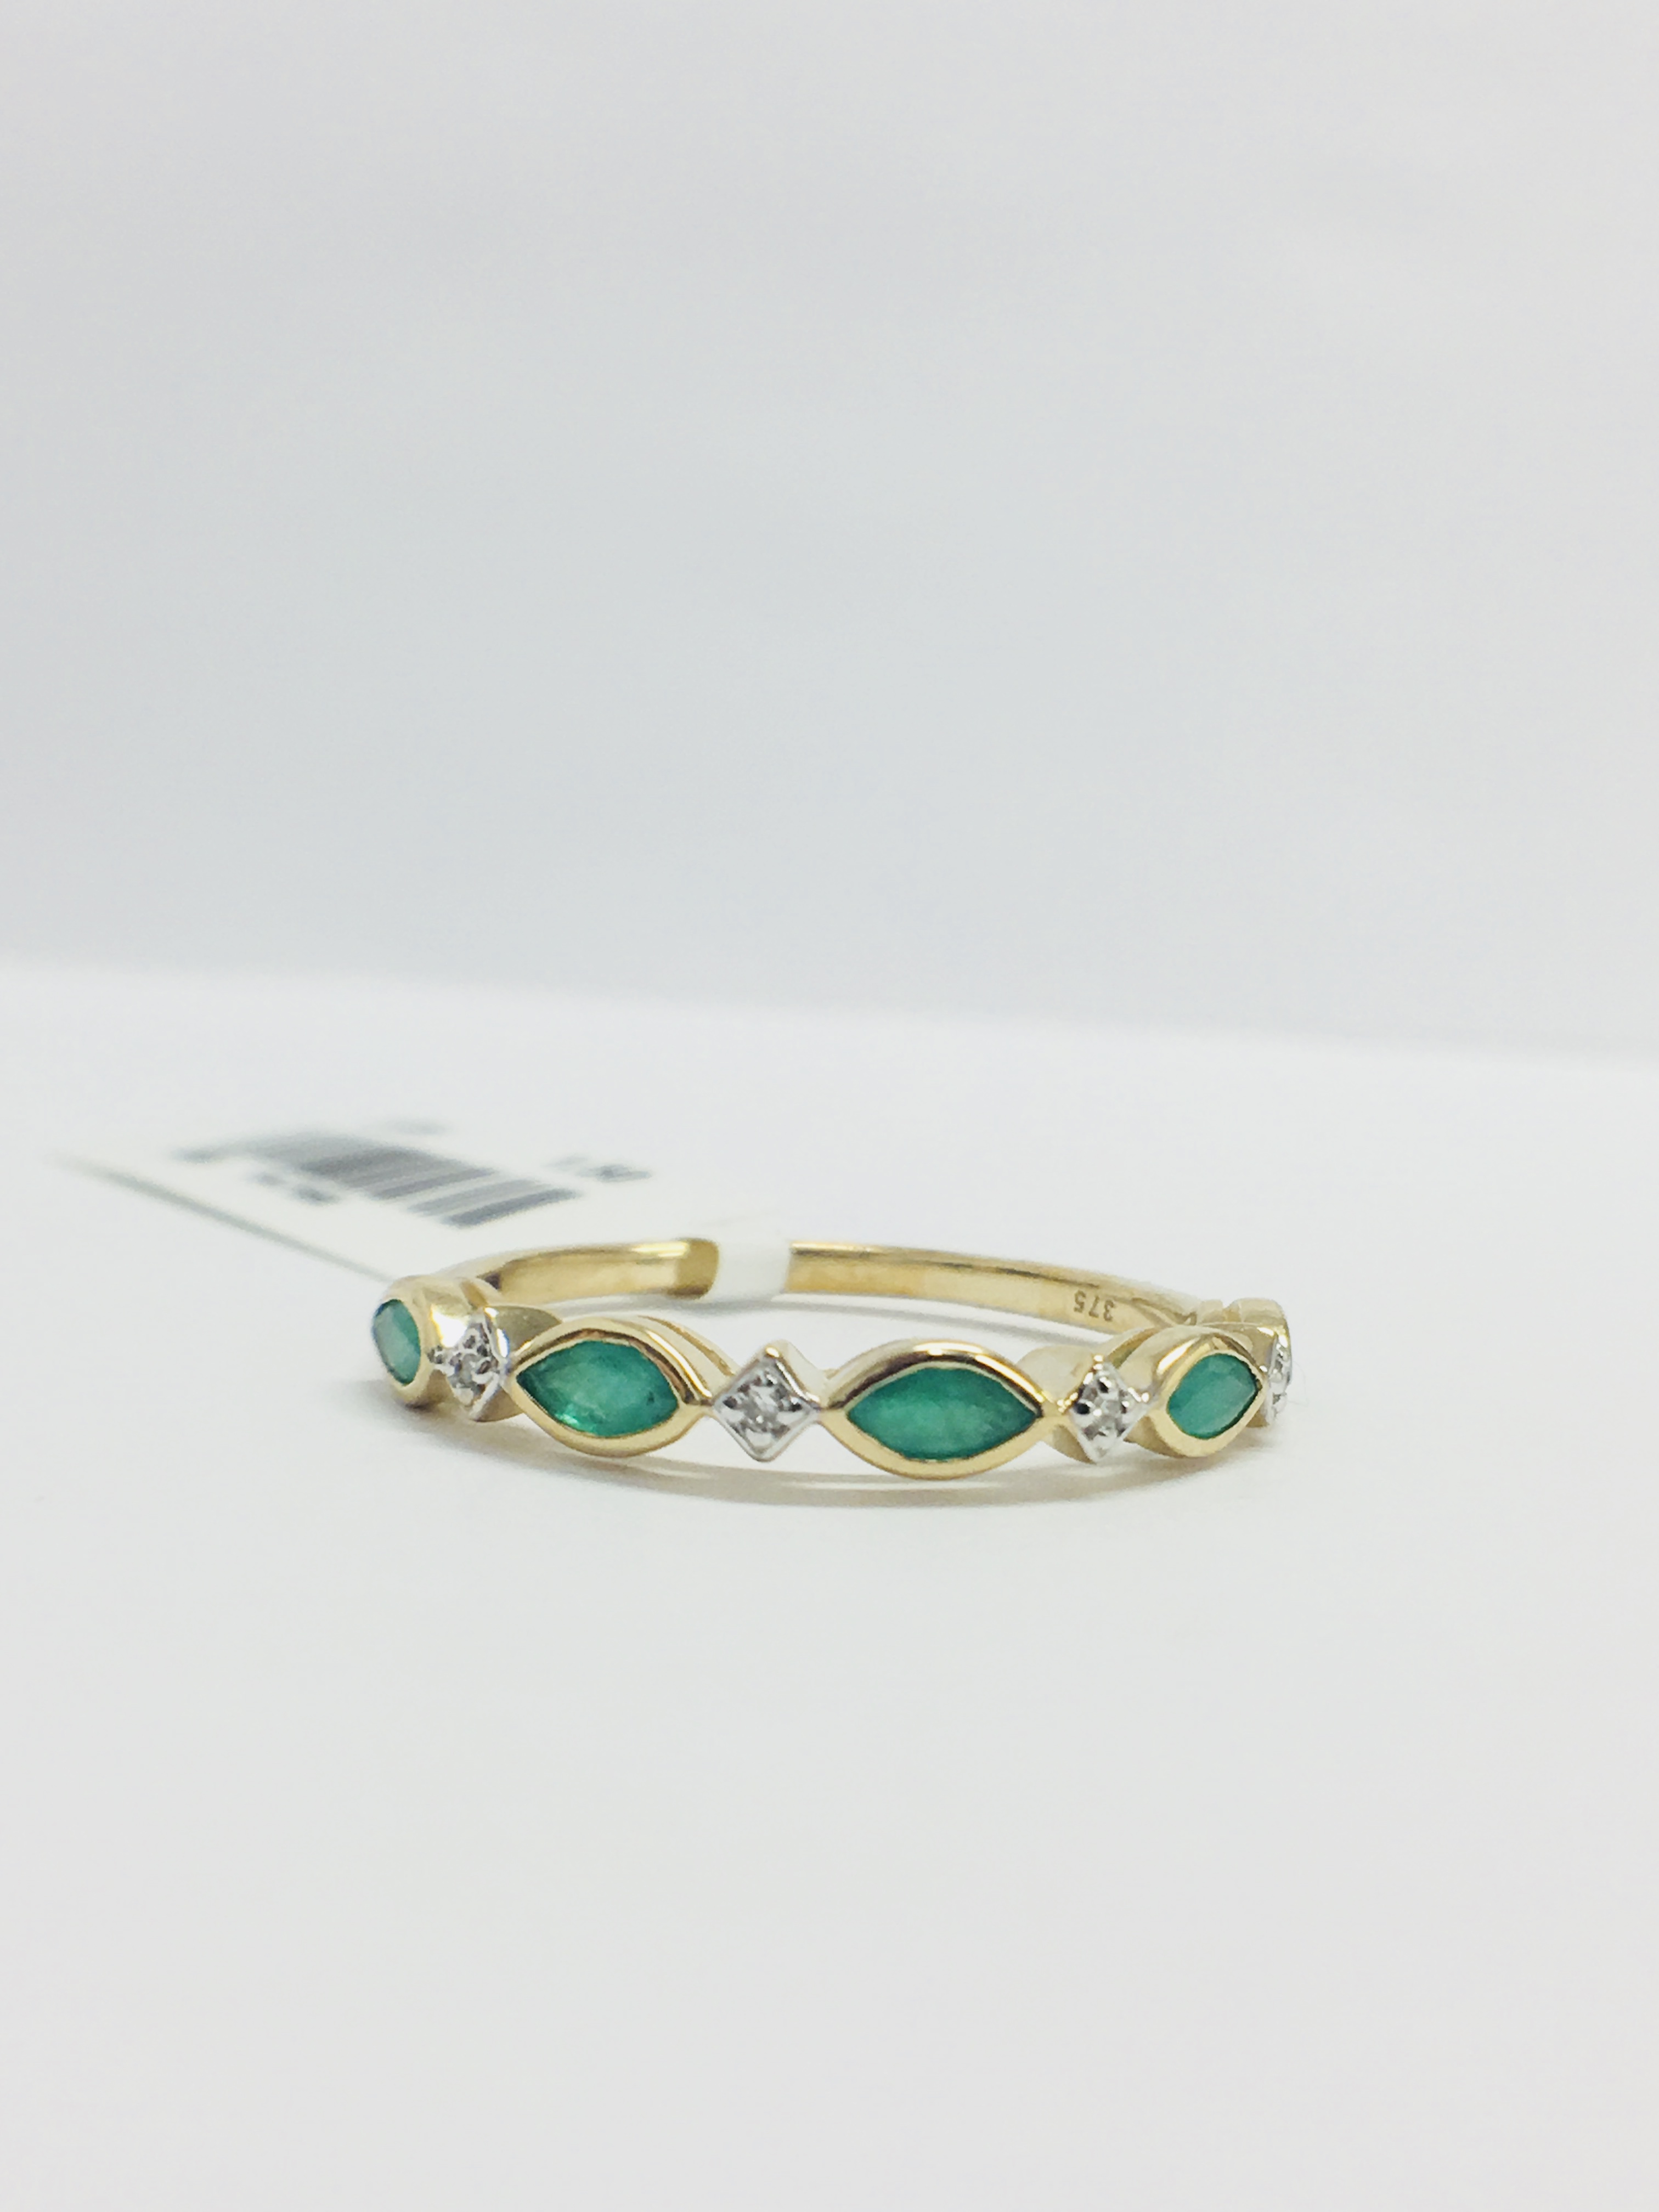 9Ct Yellow Gold Emerald Diamond Band Ring, - Image 8 of 9